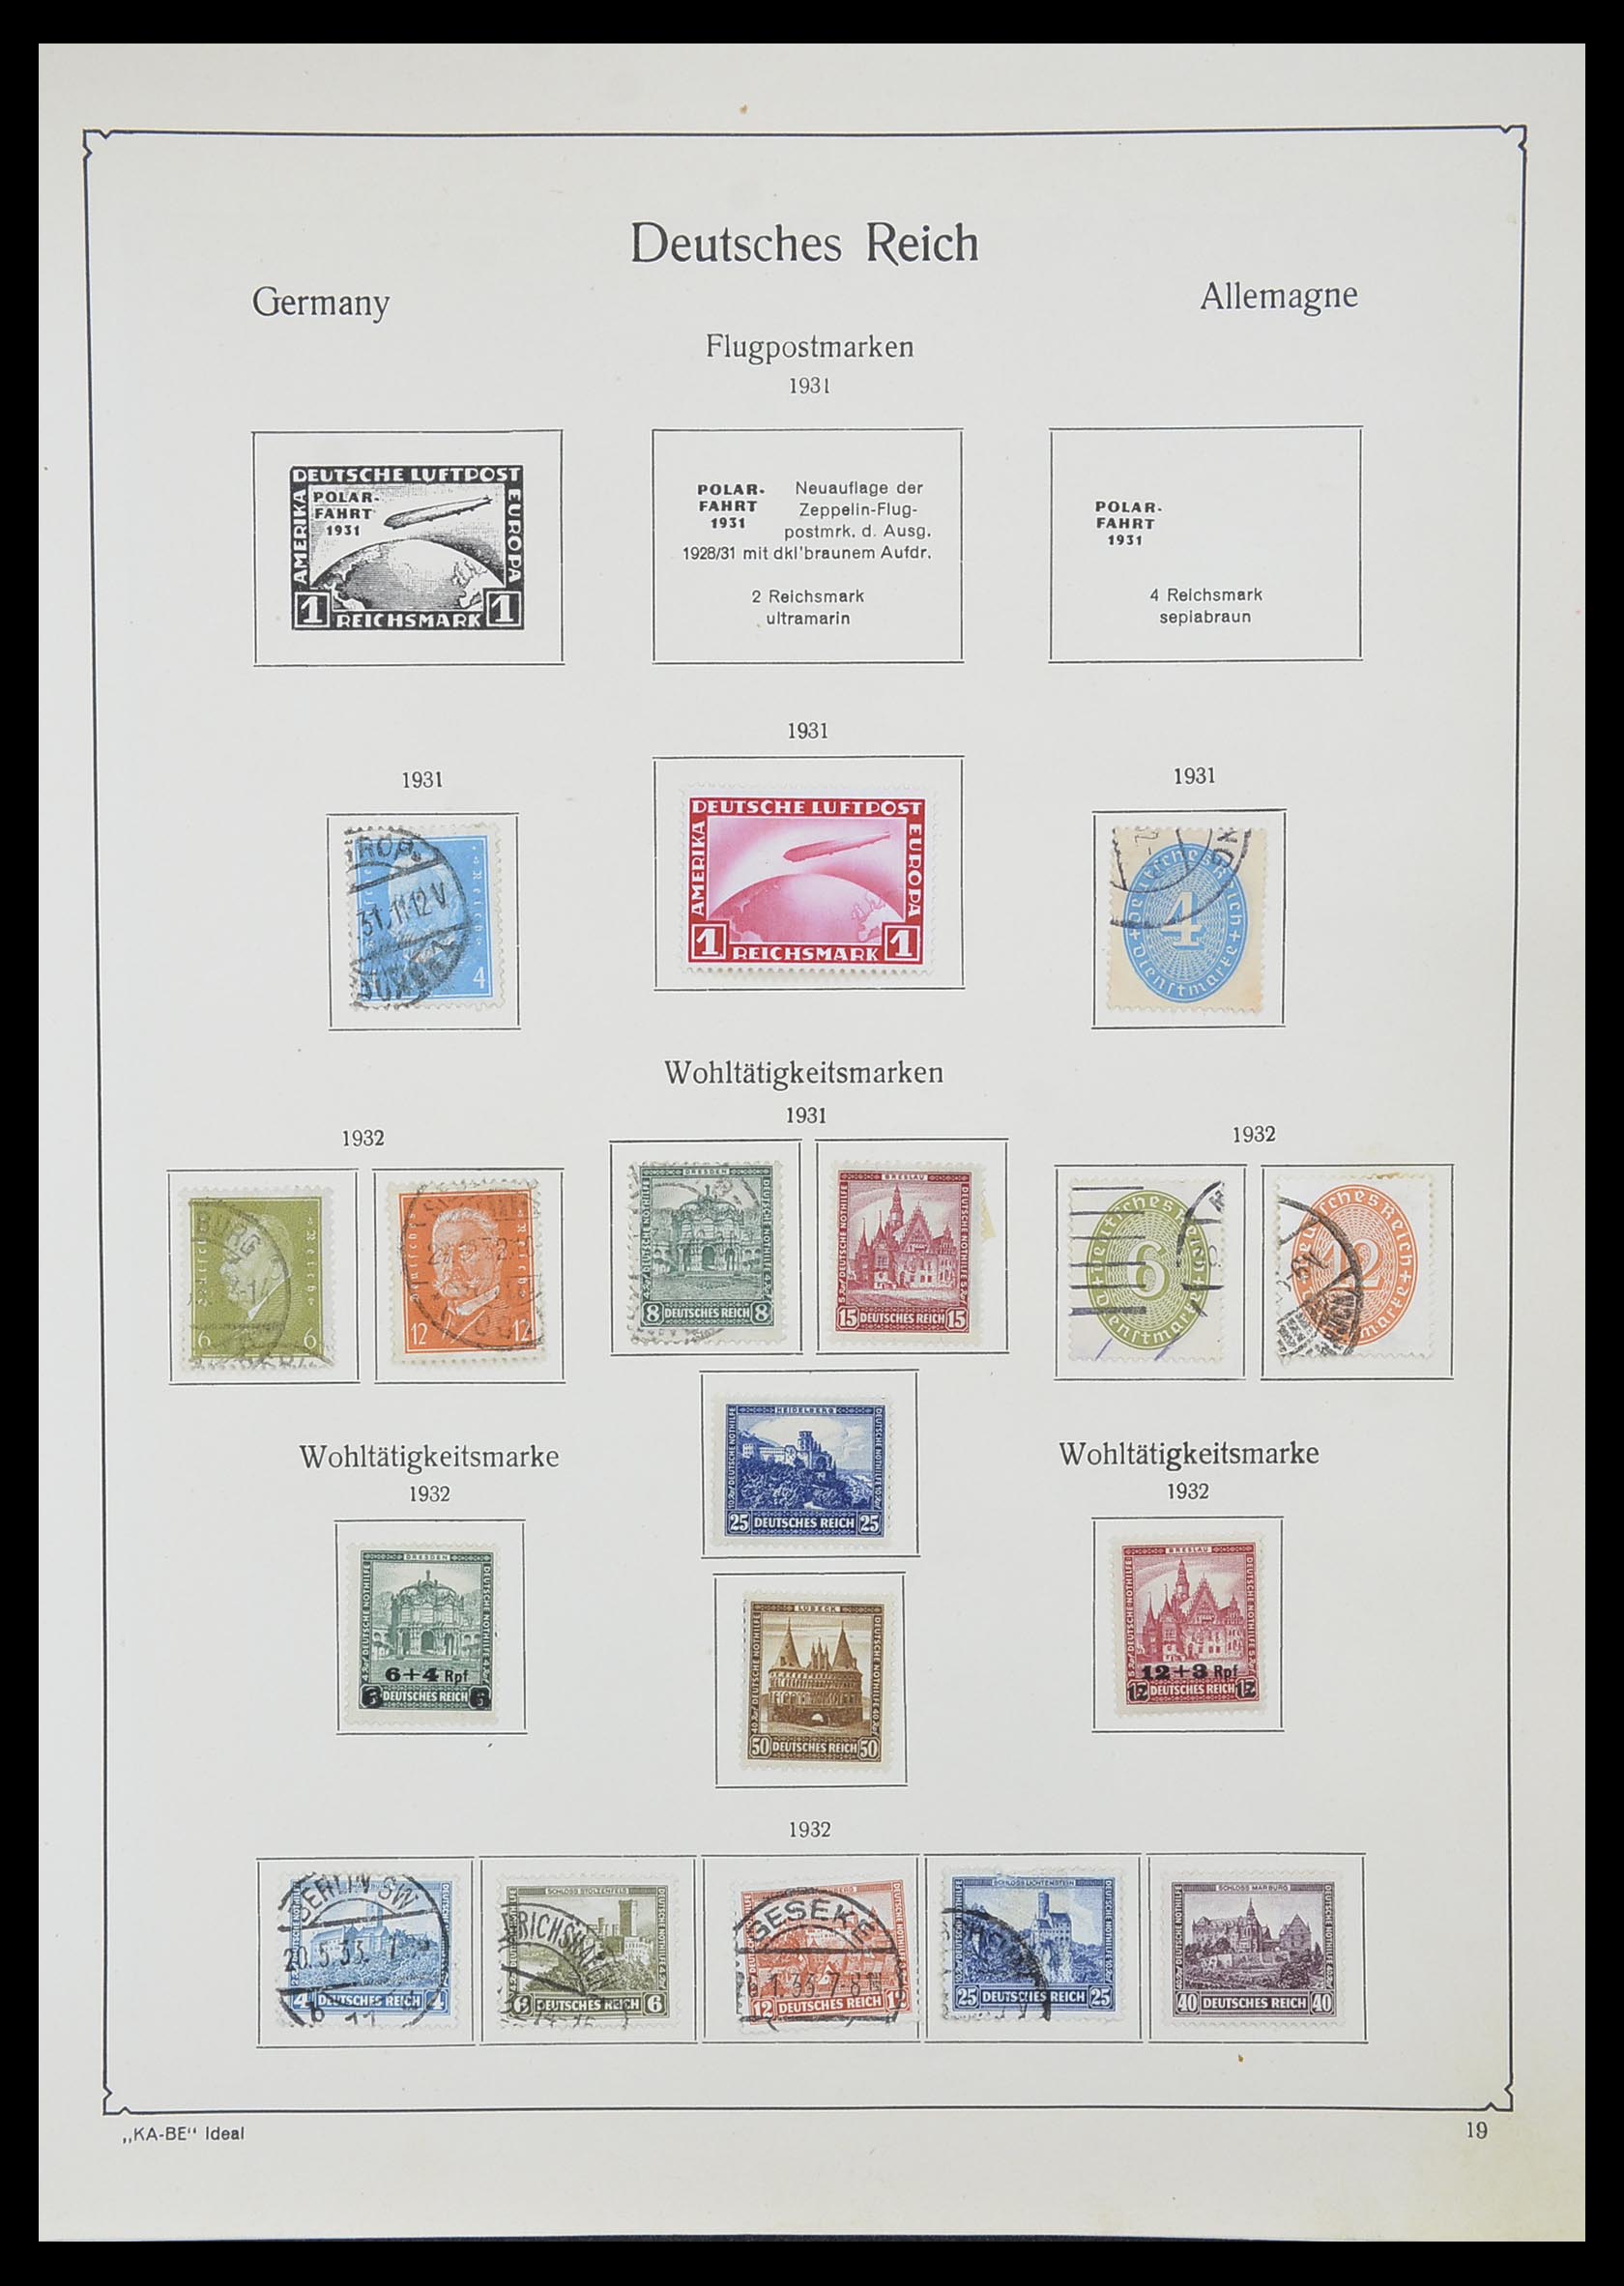 33359 024 - Stamp collection 33359 German Reich 1872-1945.